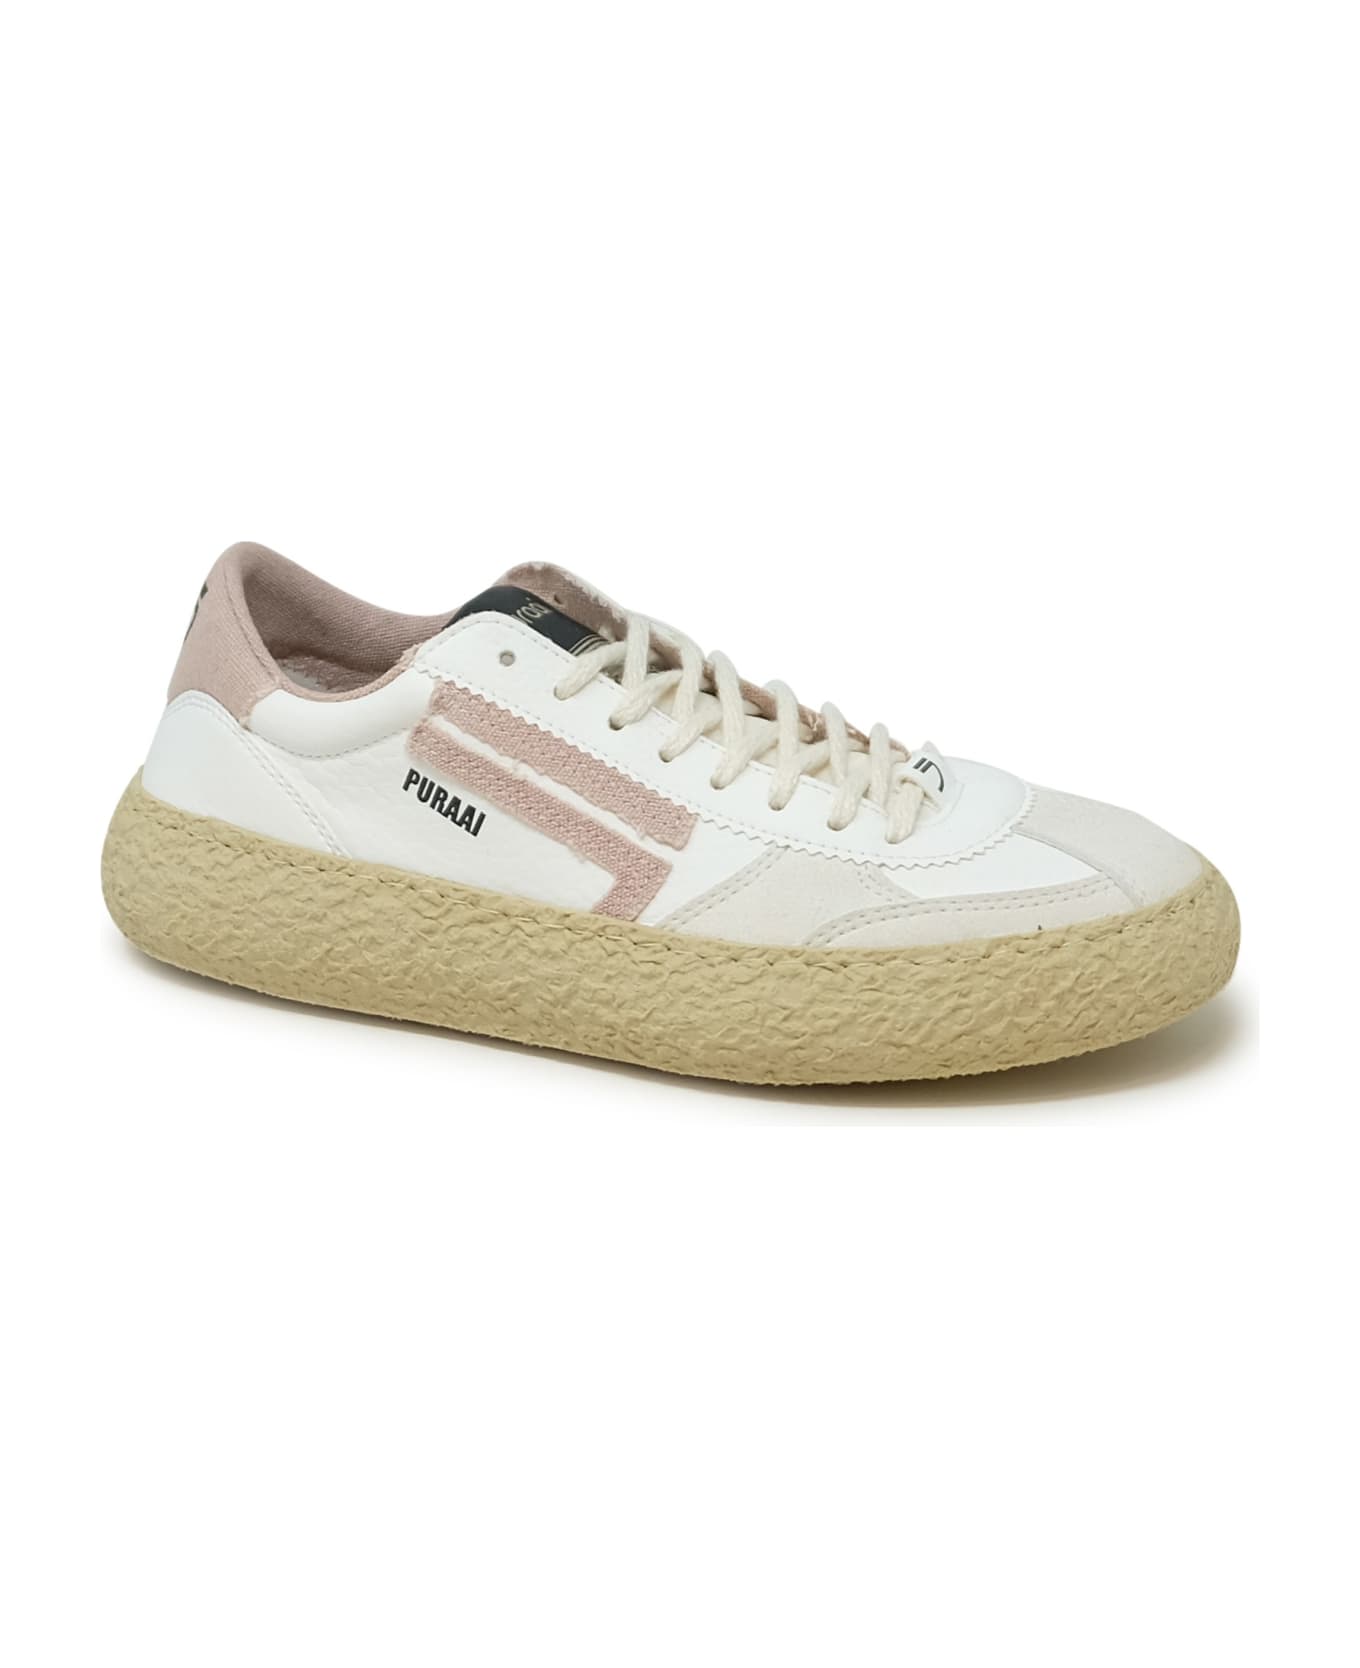 Puraai 1.01 Classic White And Pink Vegan Leather Sneakers - WHITE